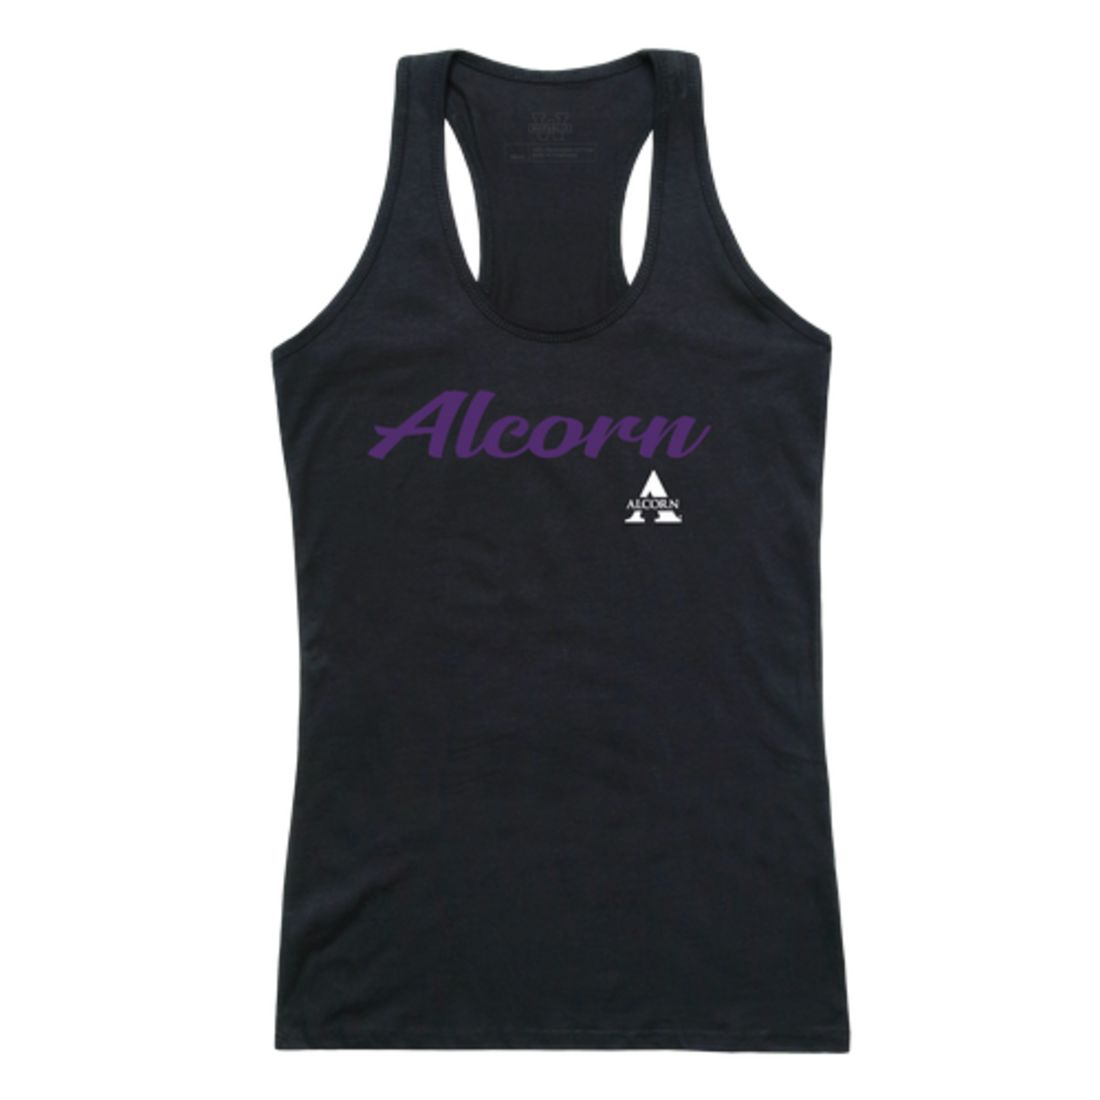 Alcorn State University Braves Womens Script Tank Top T-Shirt-Campus-Wardrobe